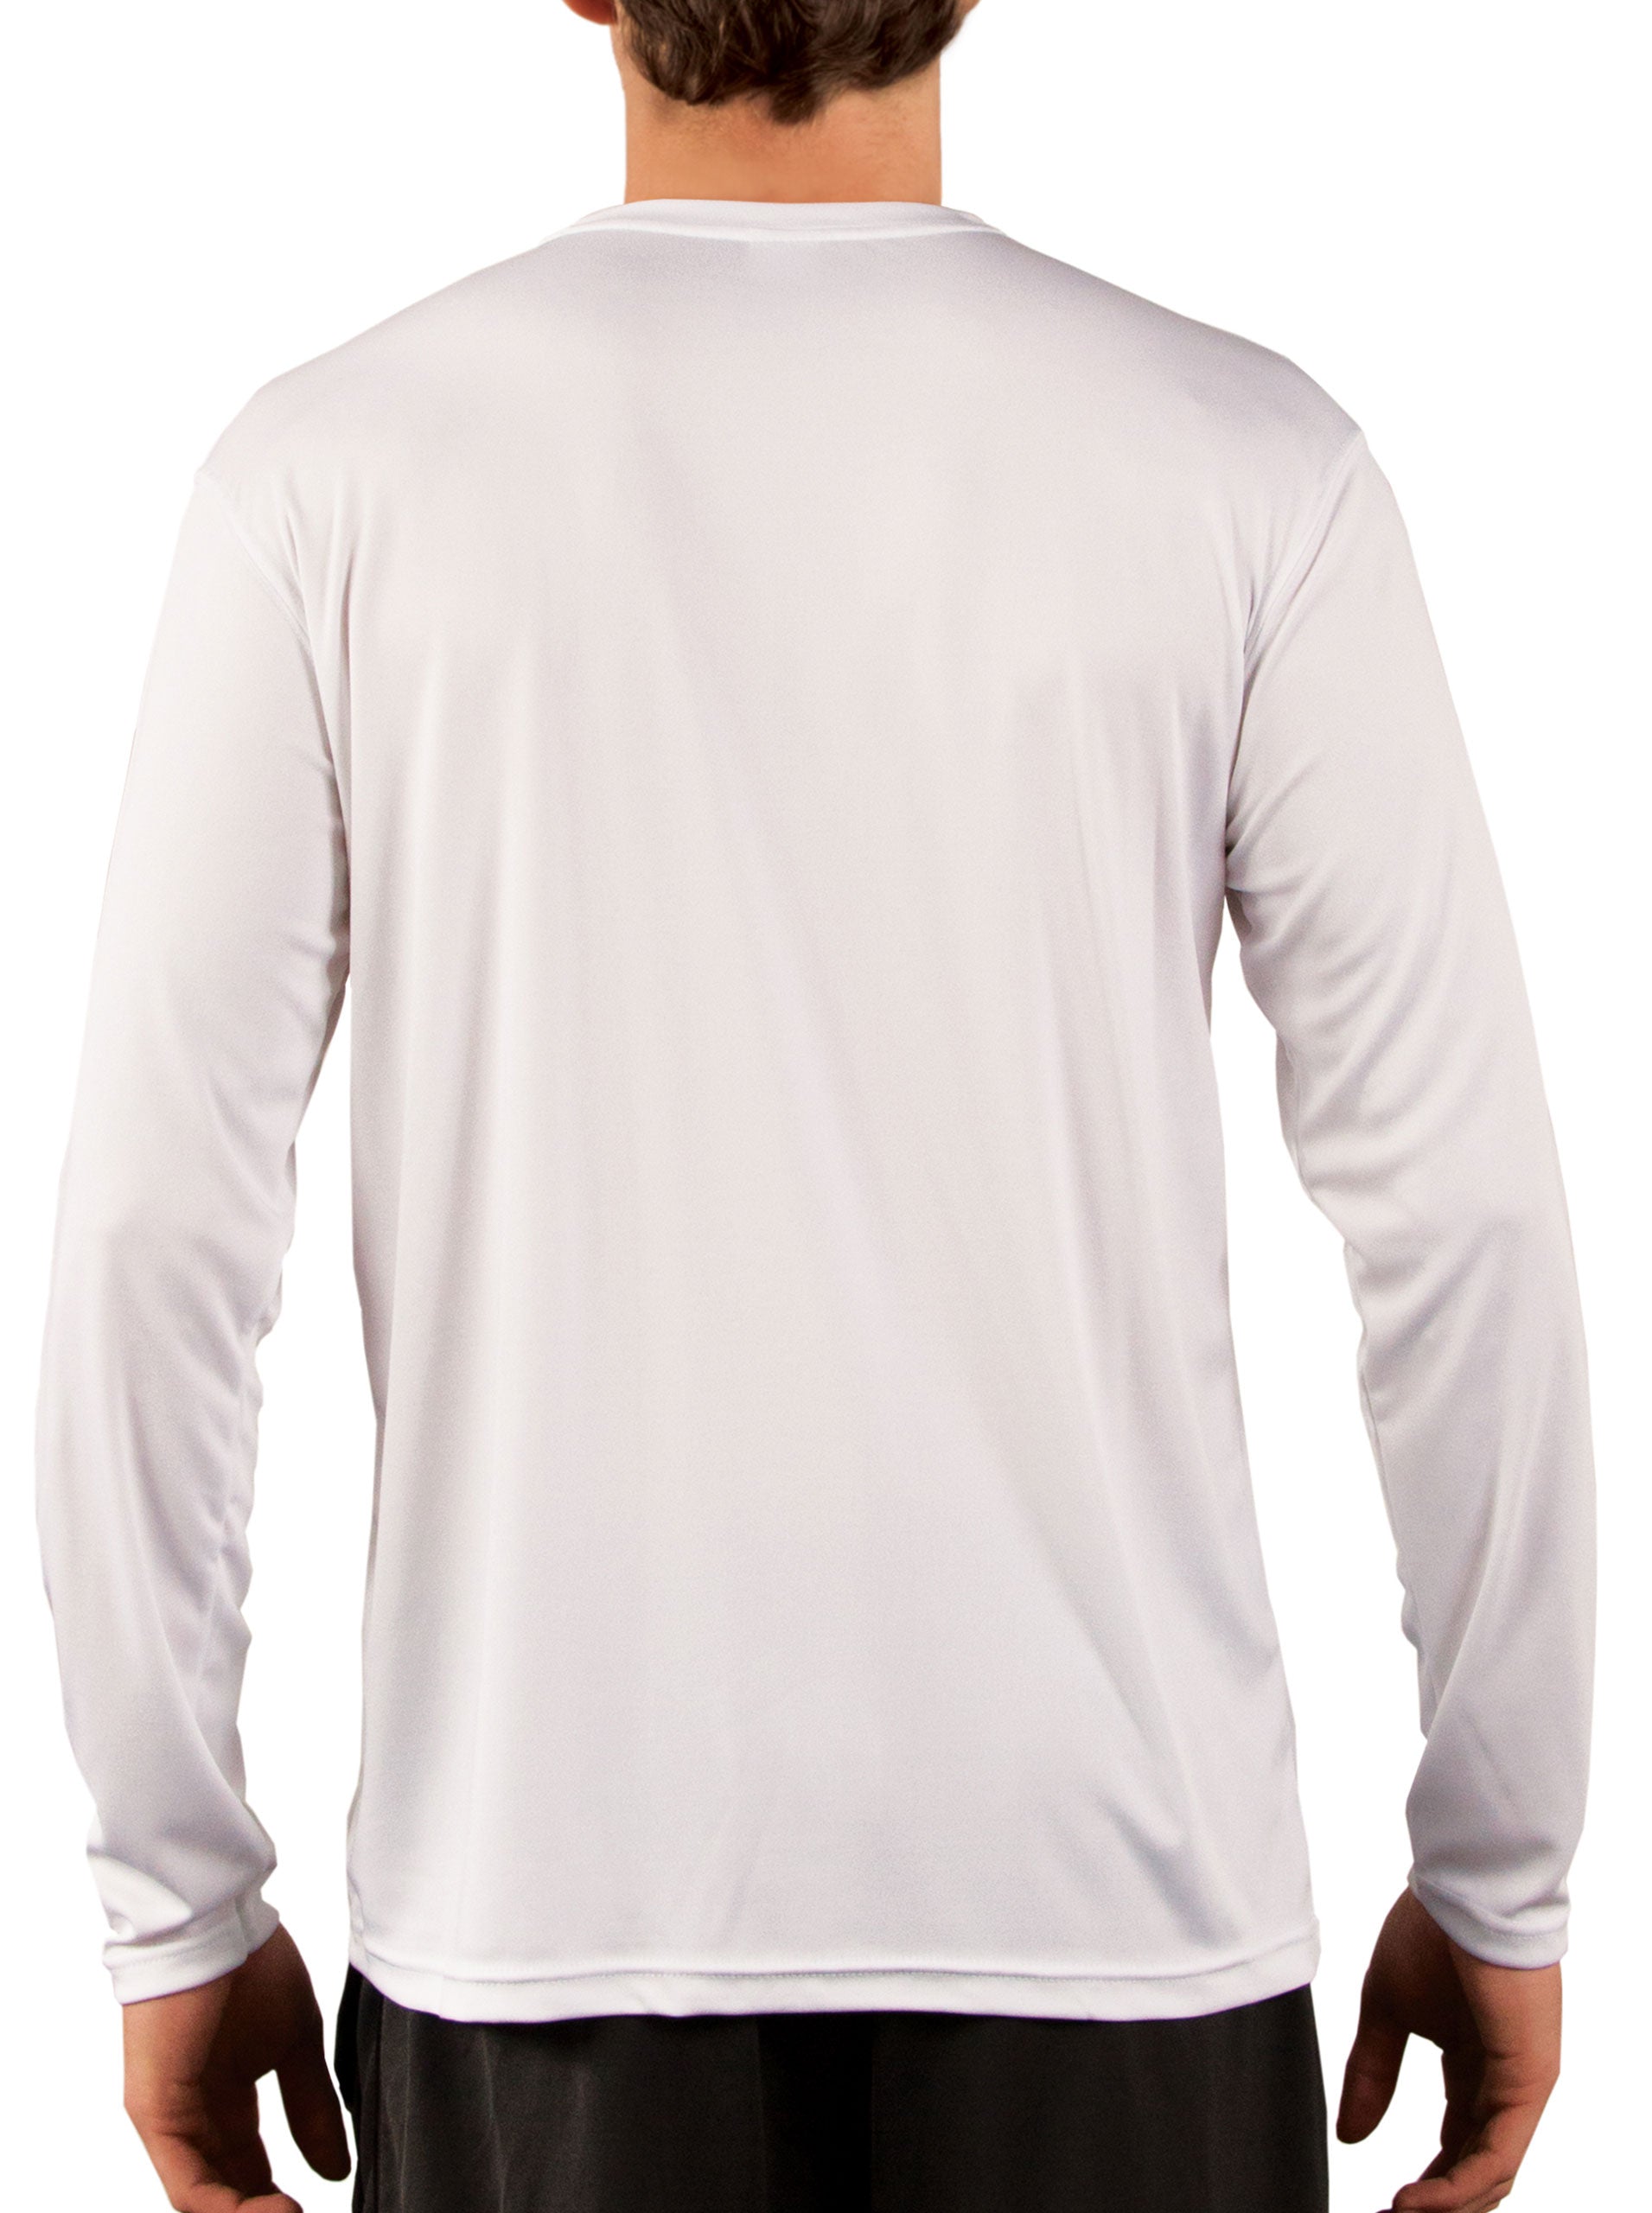 Official 2021 Polar Bear Plunge Milwaukee White Long Sleeve T-Shirt